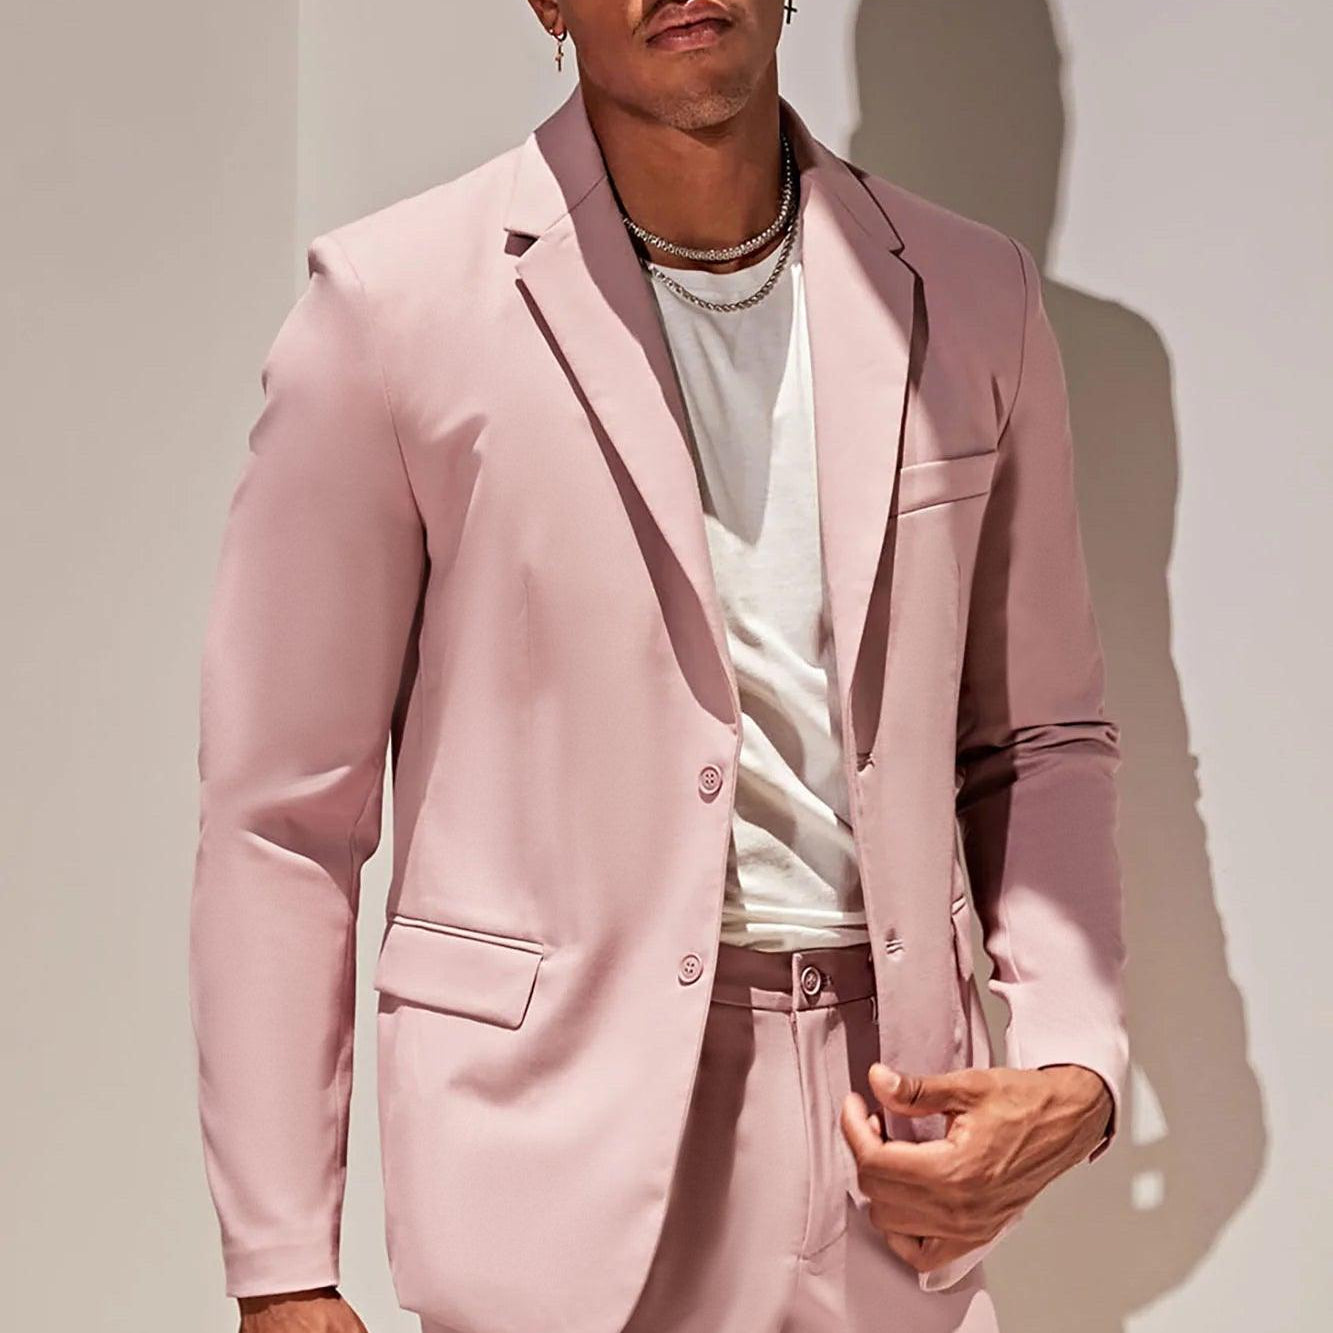 Men's Jackets - Blazers The Modern Stretch Suit Jacket - Mauve